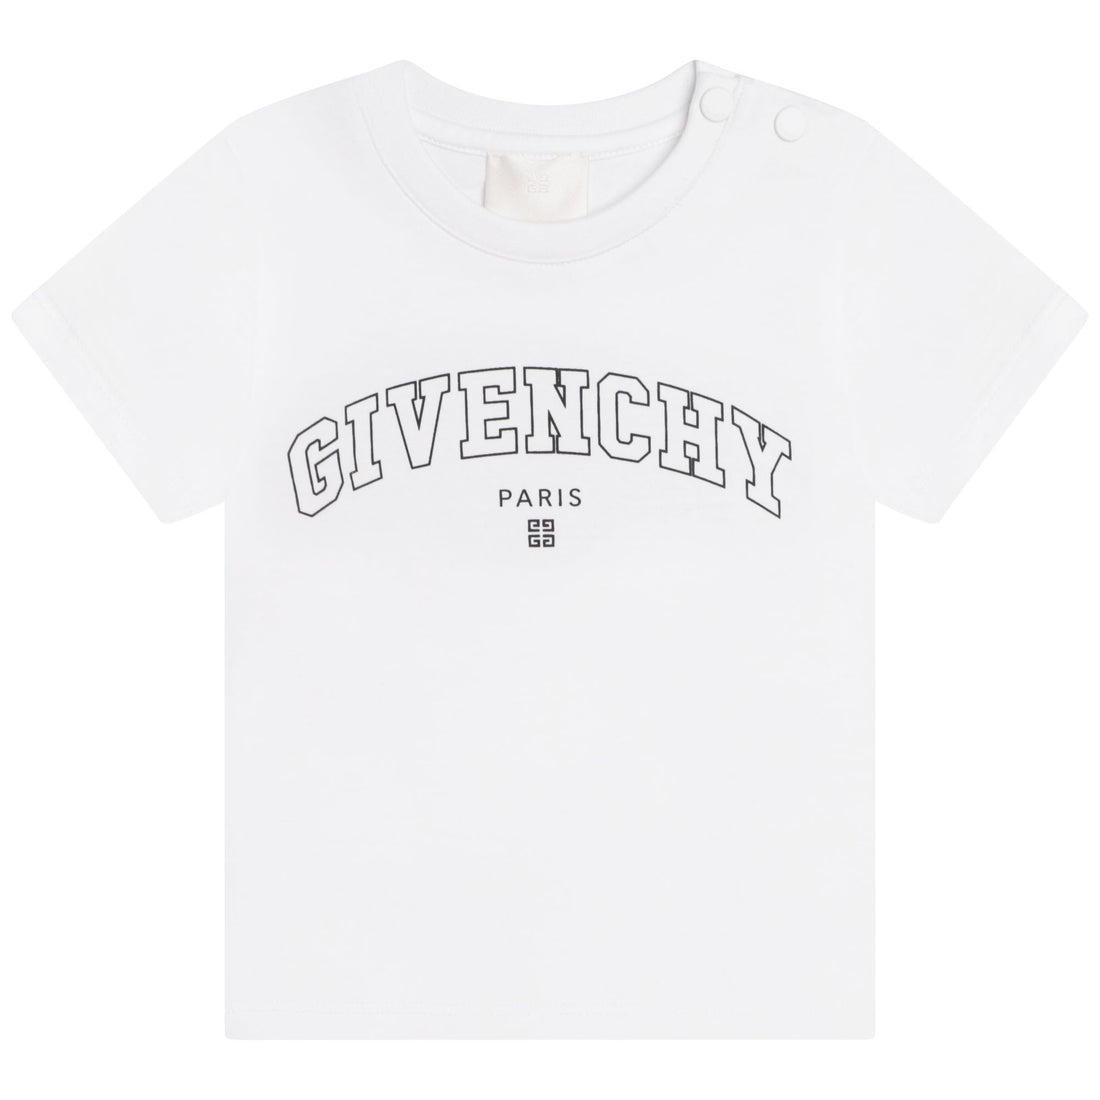 Givenchy Short Sleeves Tee-Shirt Style: H05248